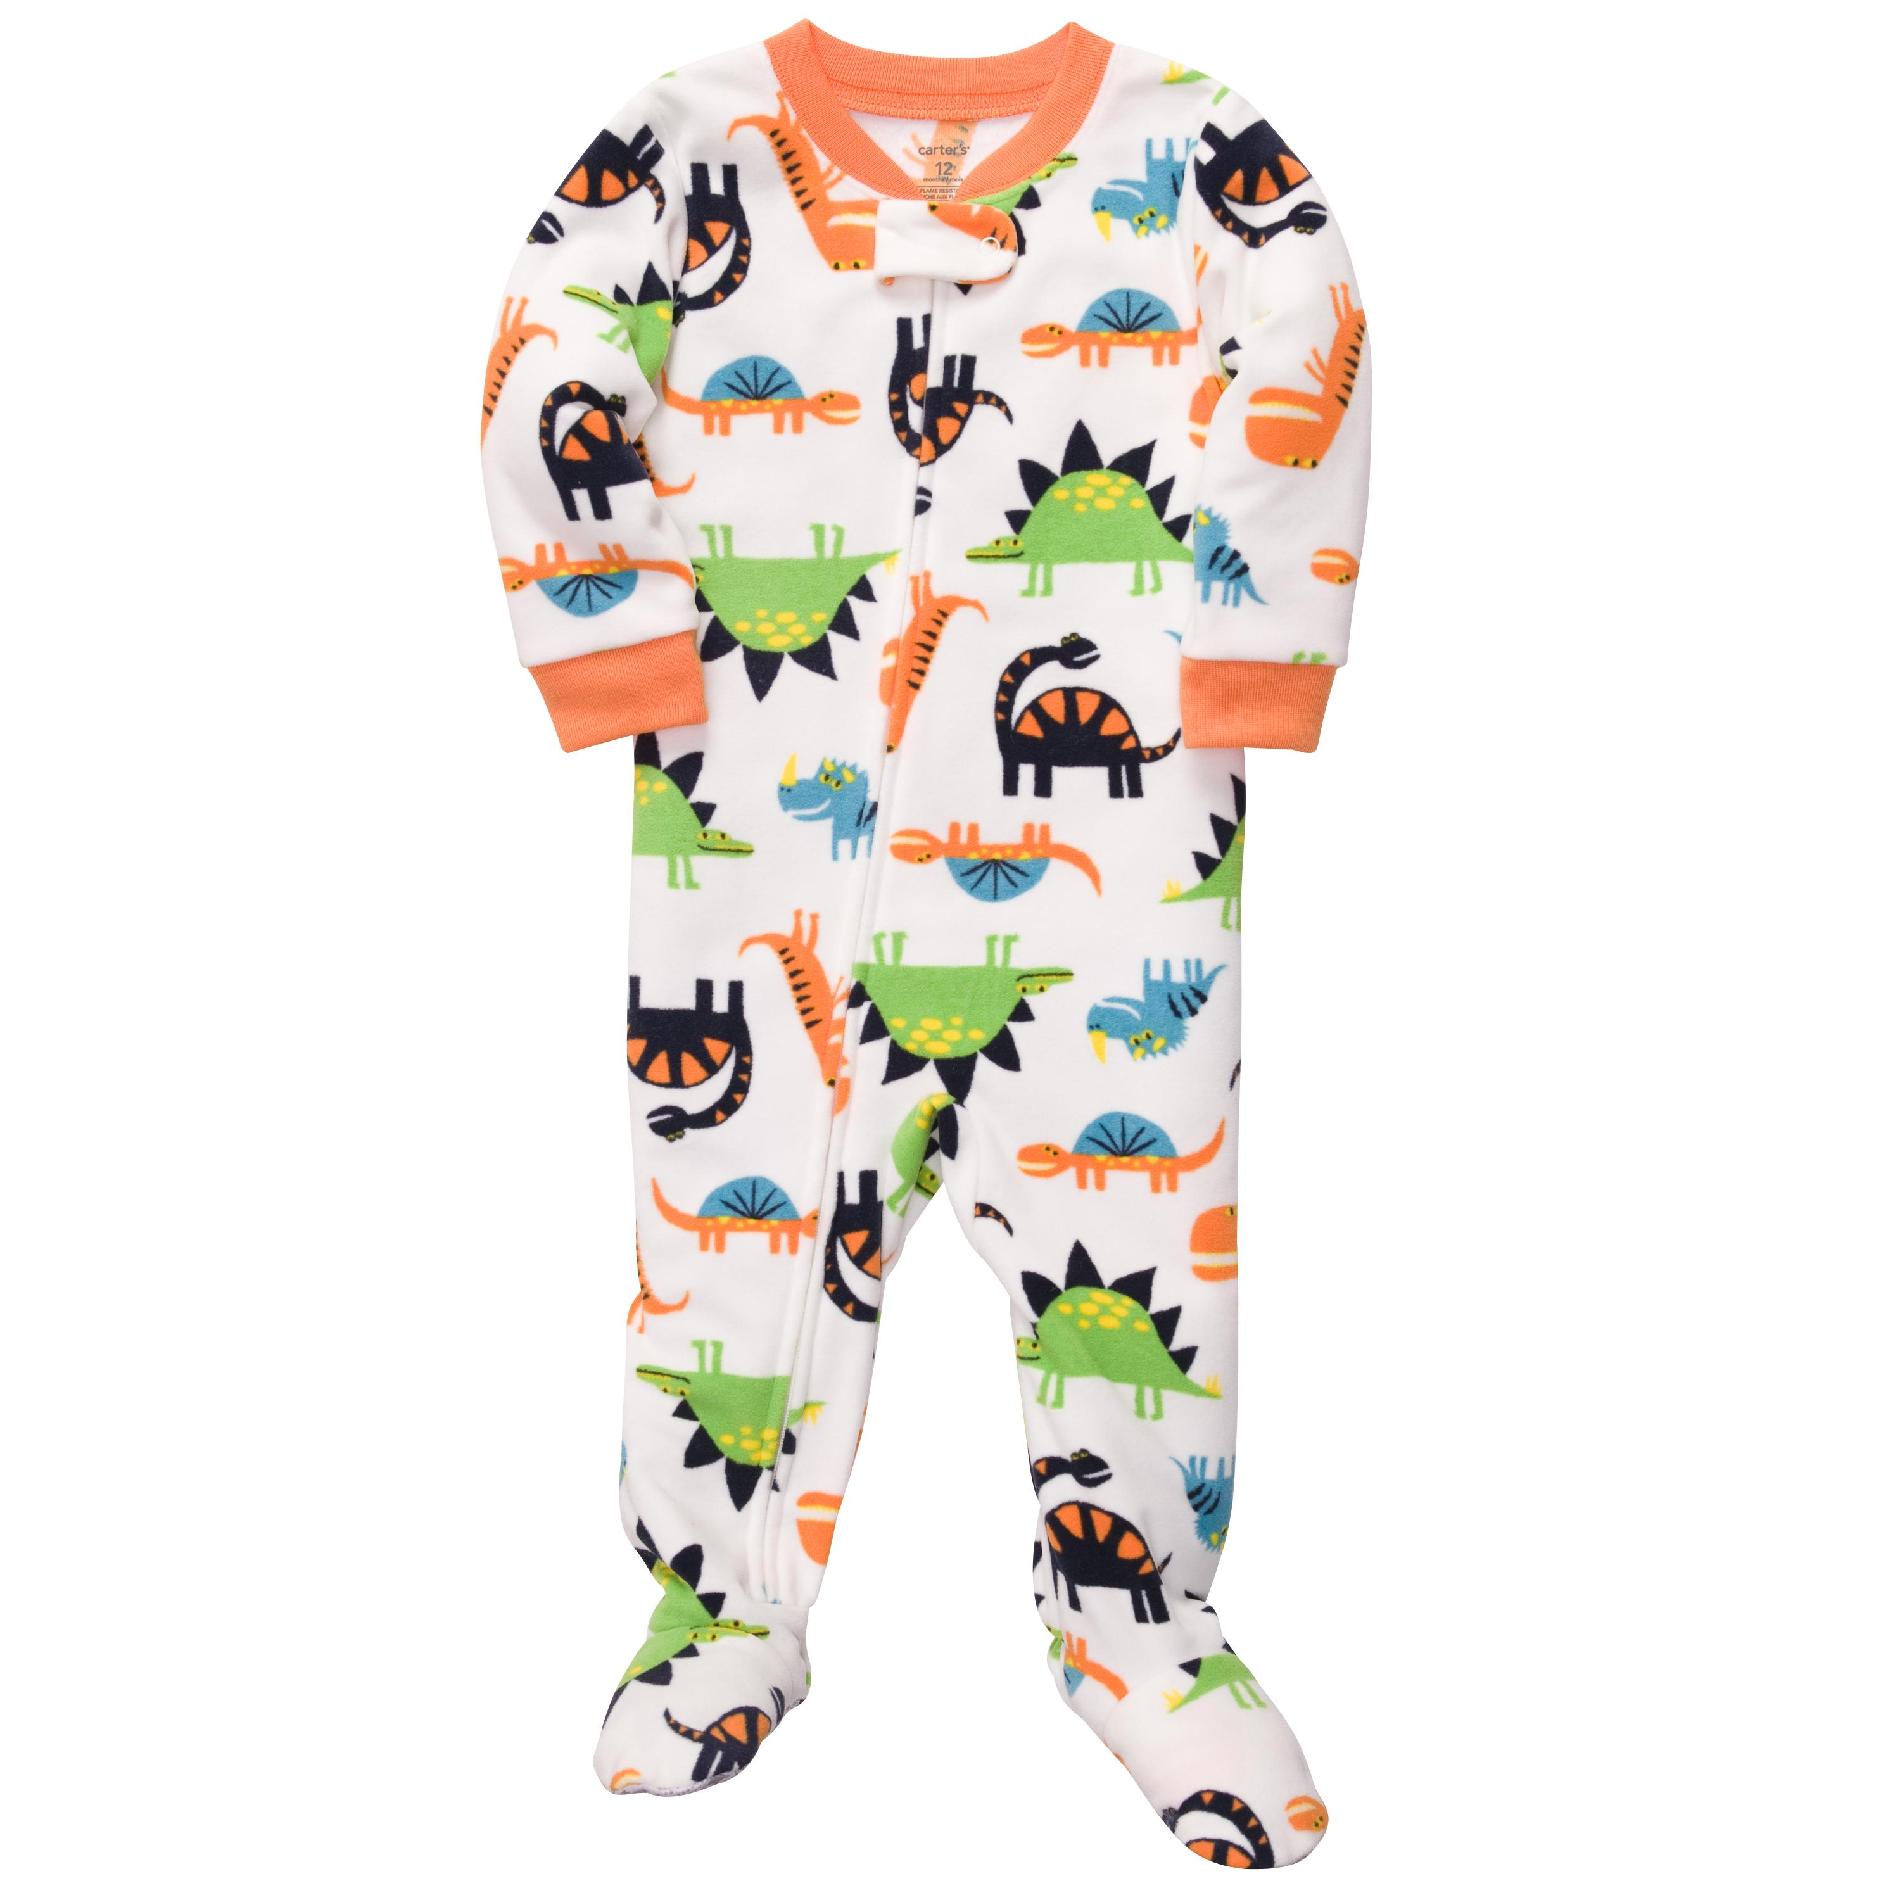 Carter's Infant & Toddler Boy's Fleece Sleeper Pajamas - Dinosaurs